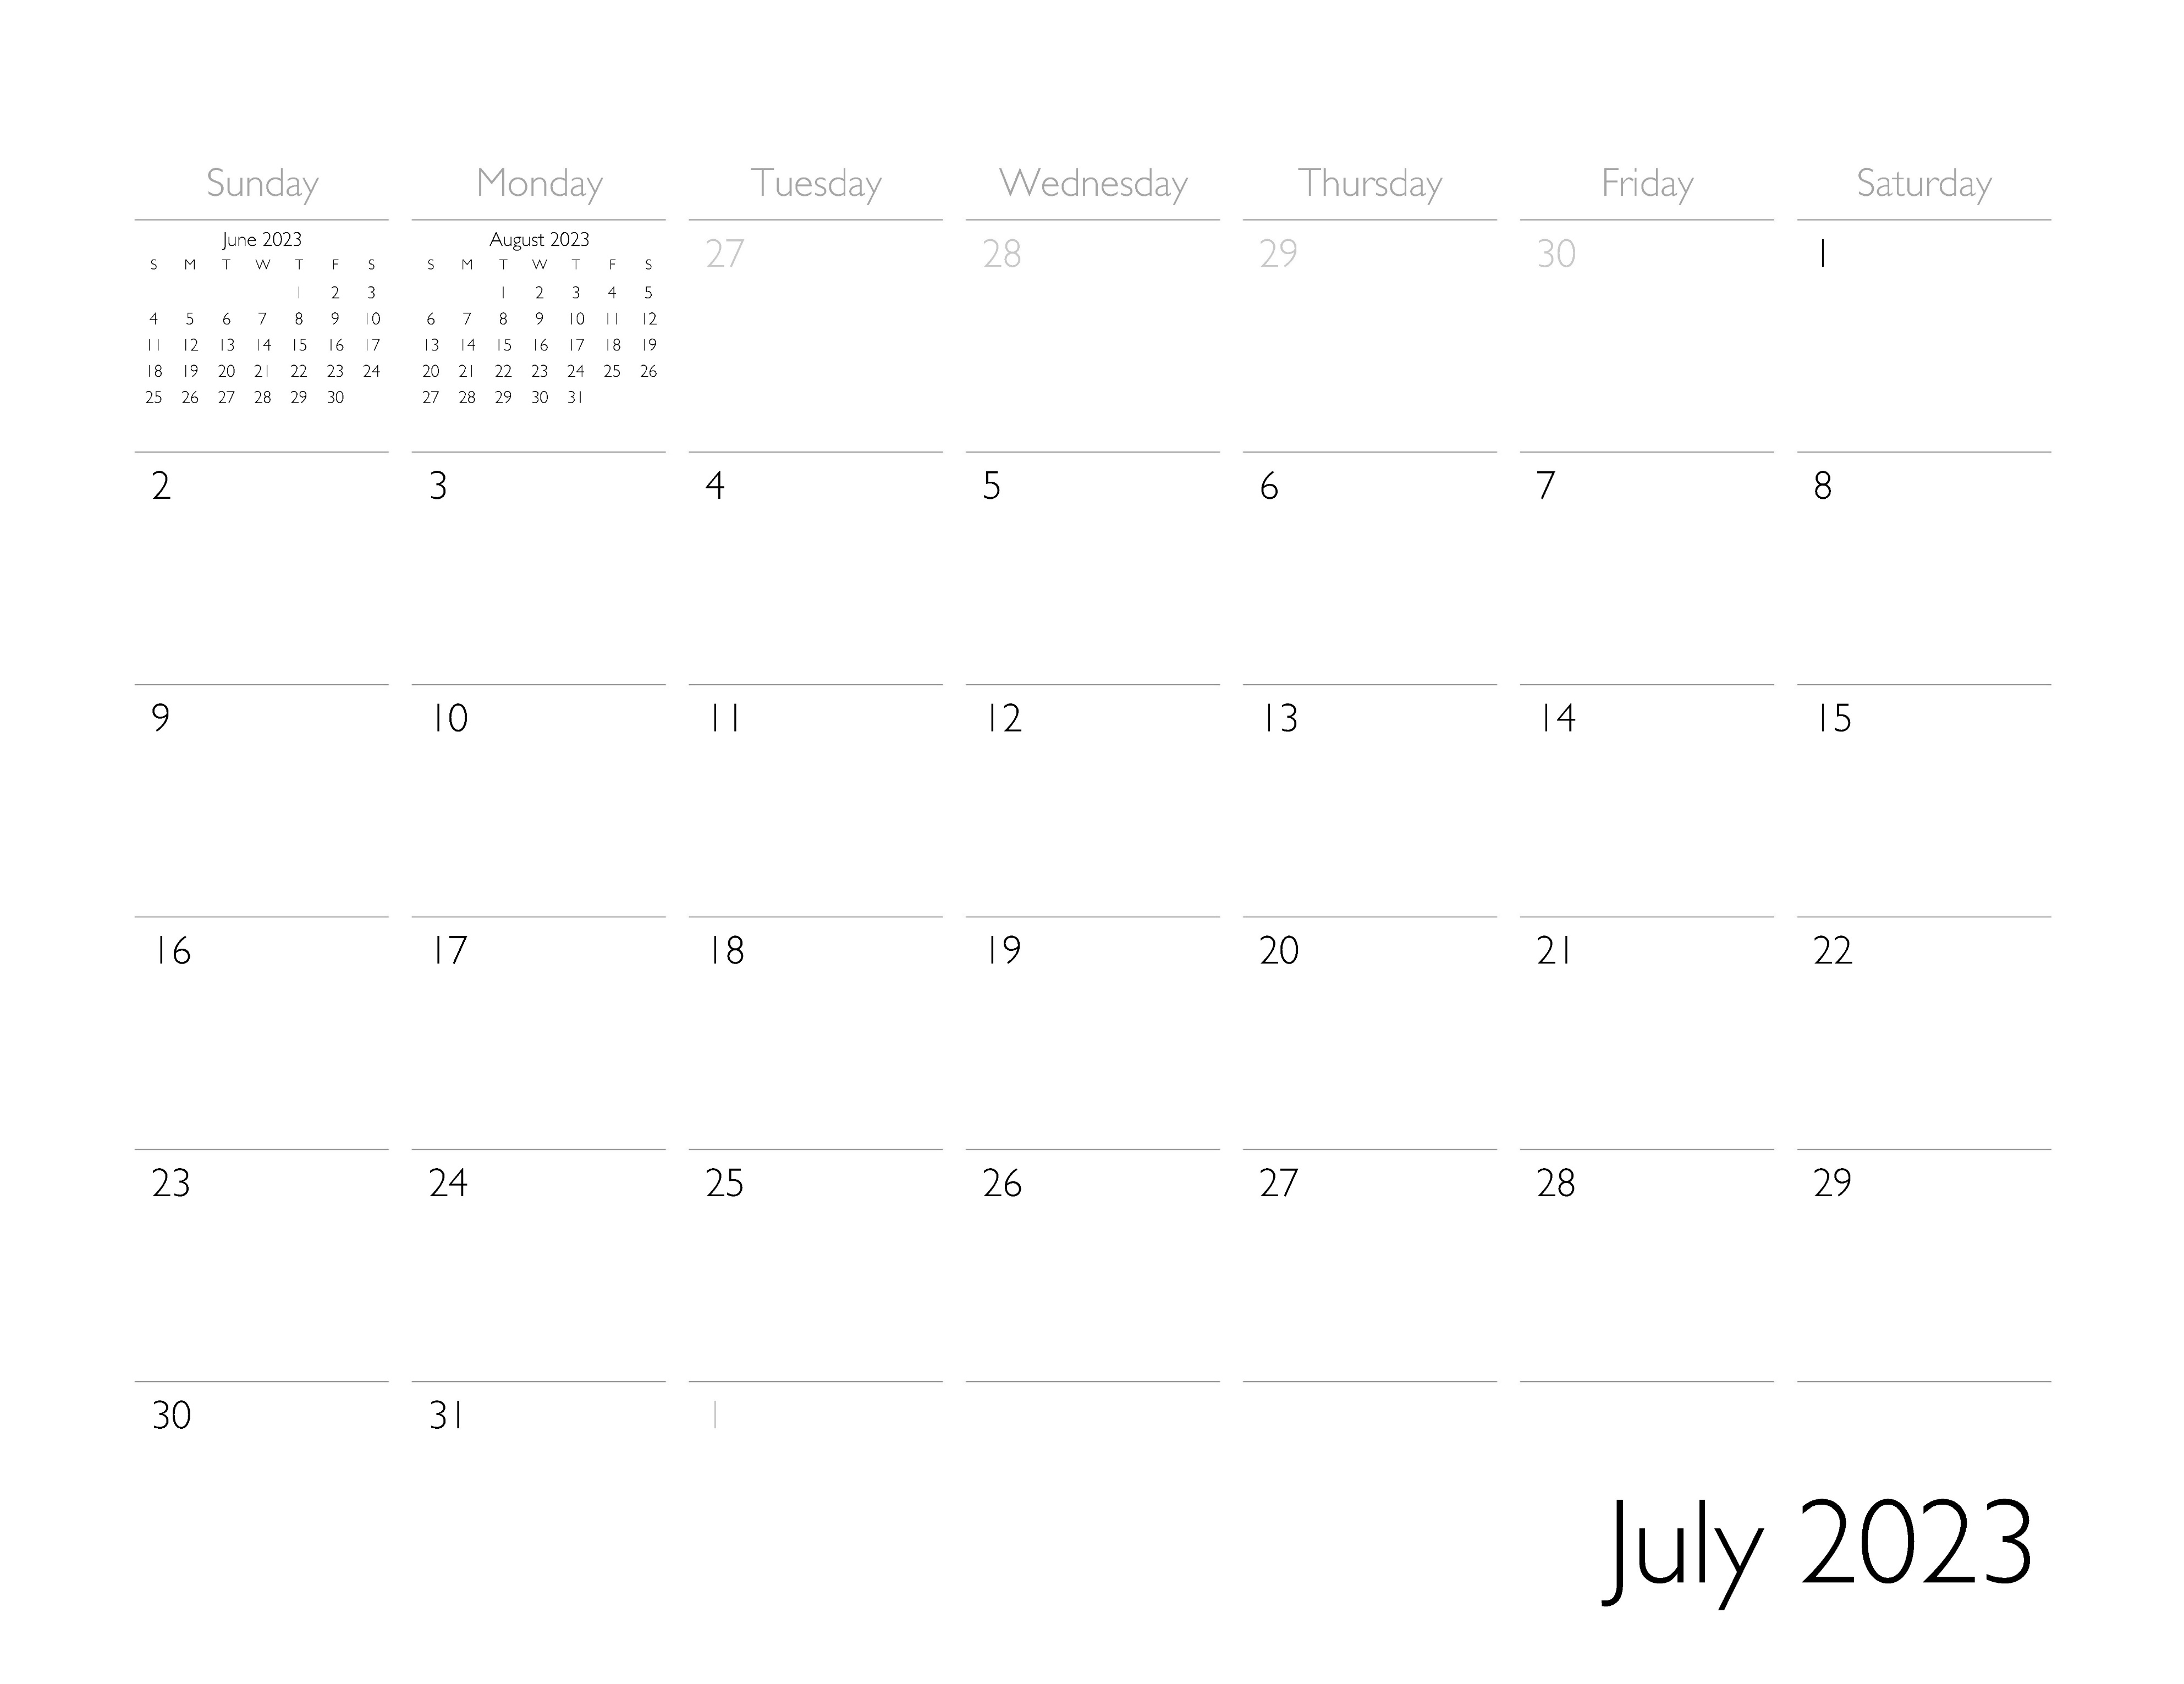 July 2023 Calendar Page